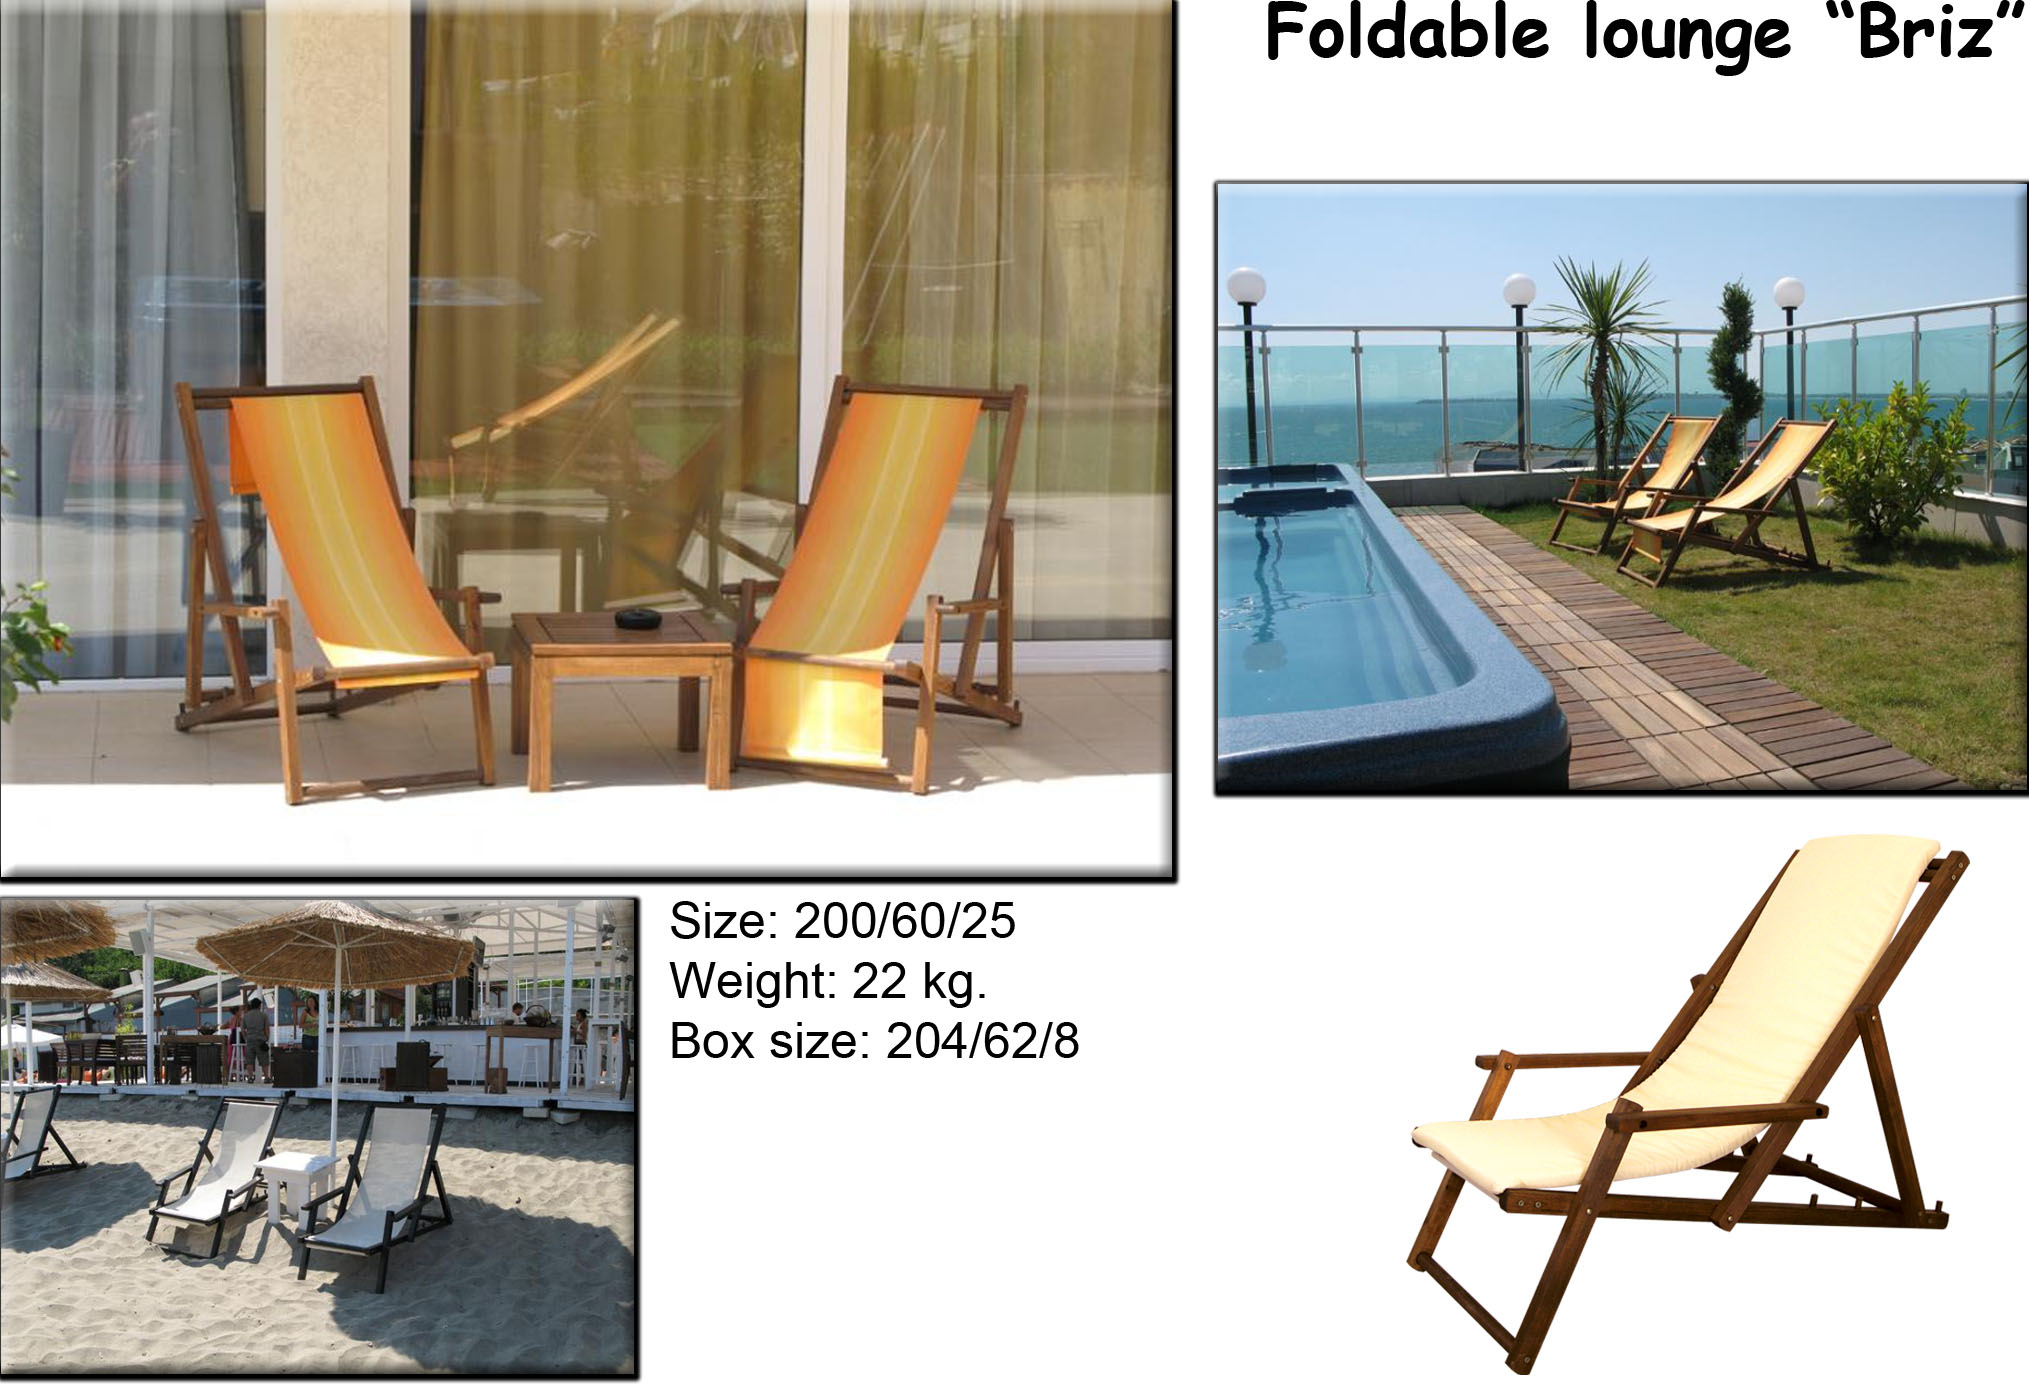 Foldable Lounge Briz